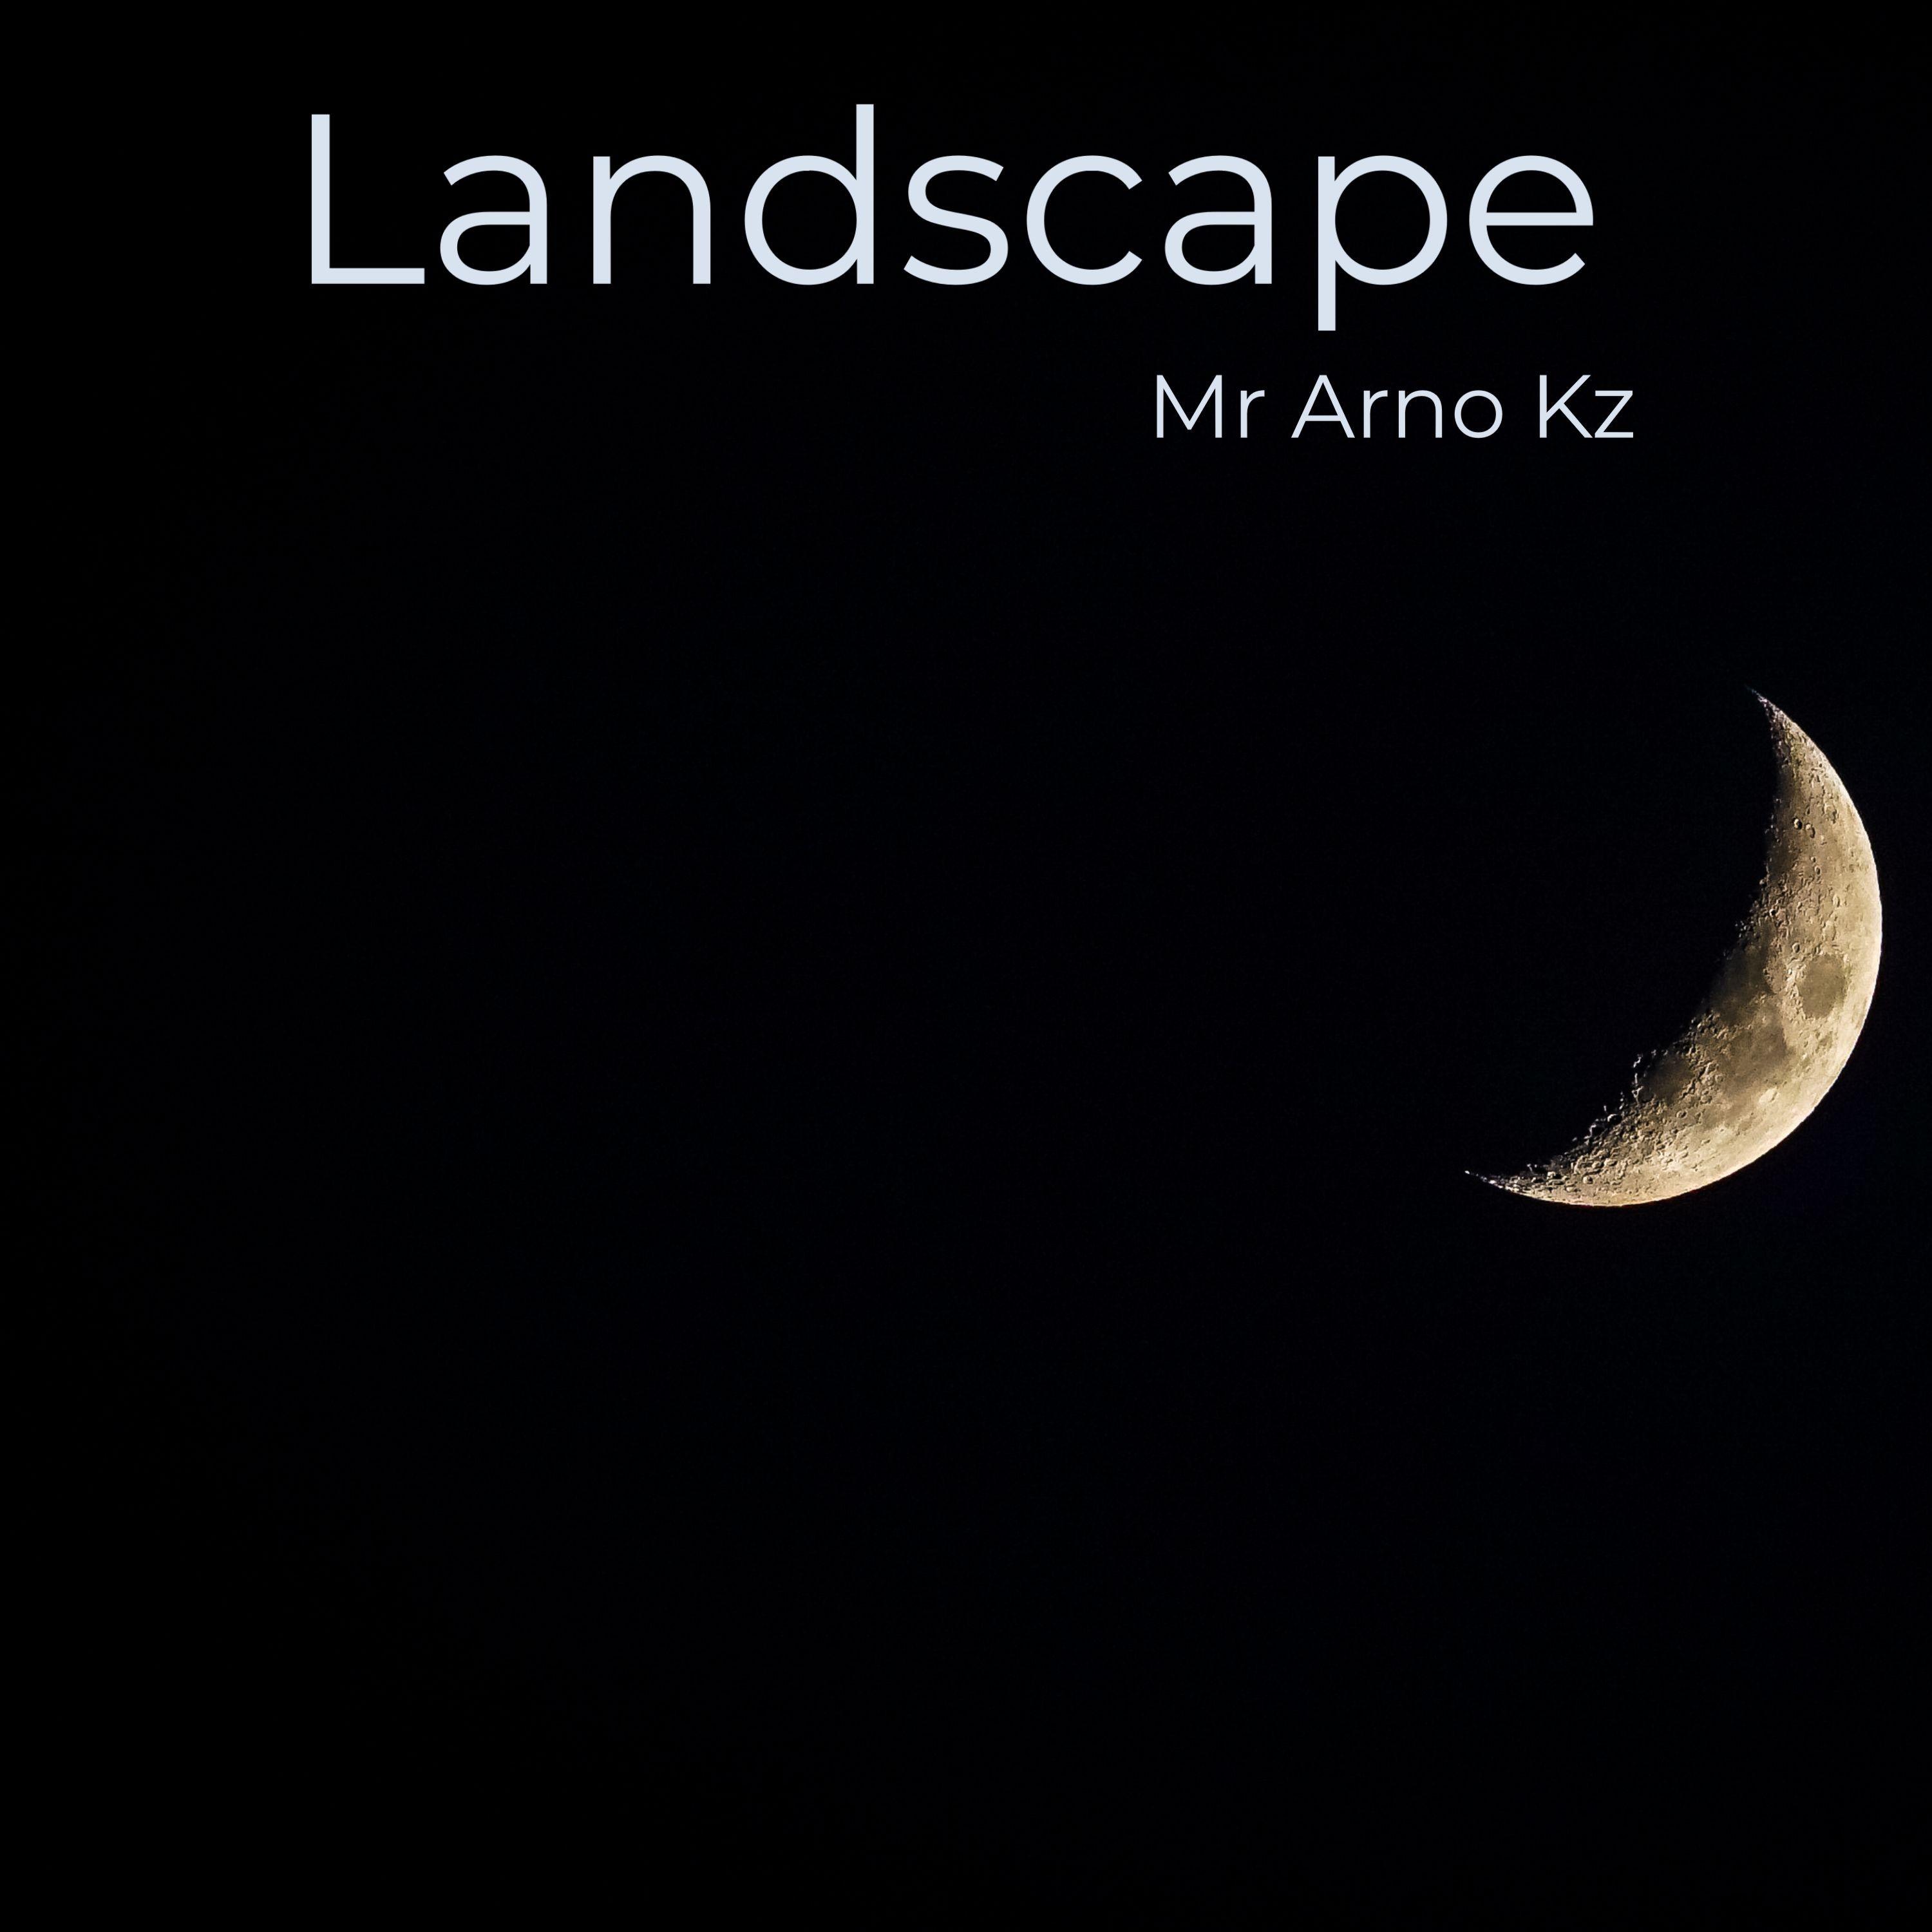 Mr Arno Kz - Landscape